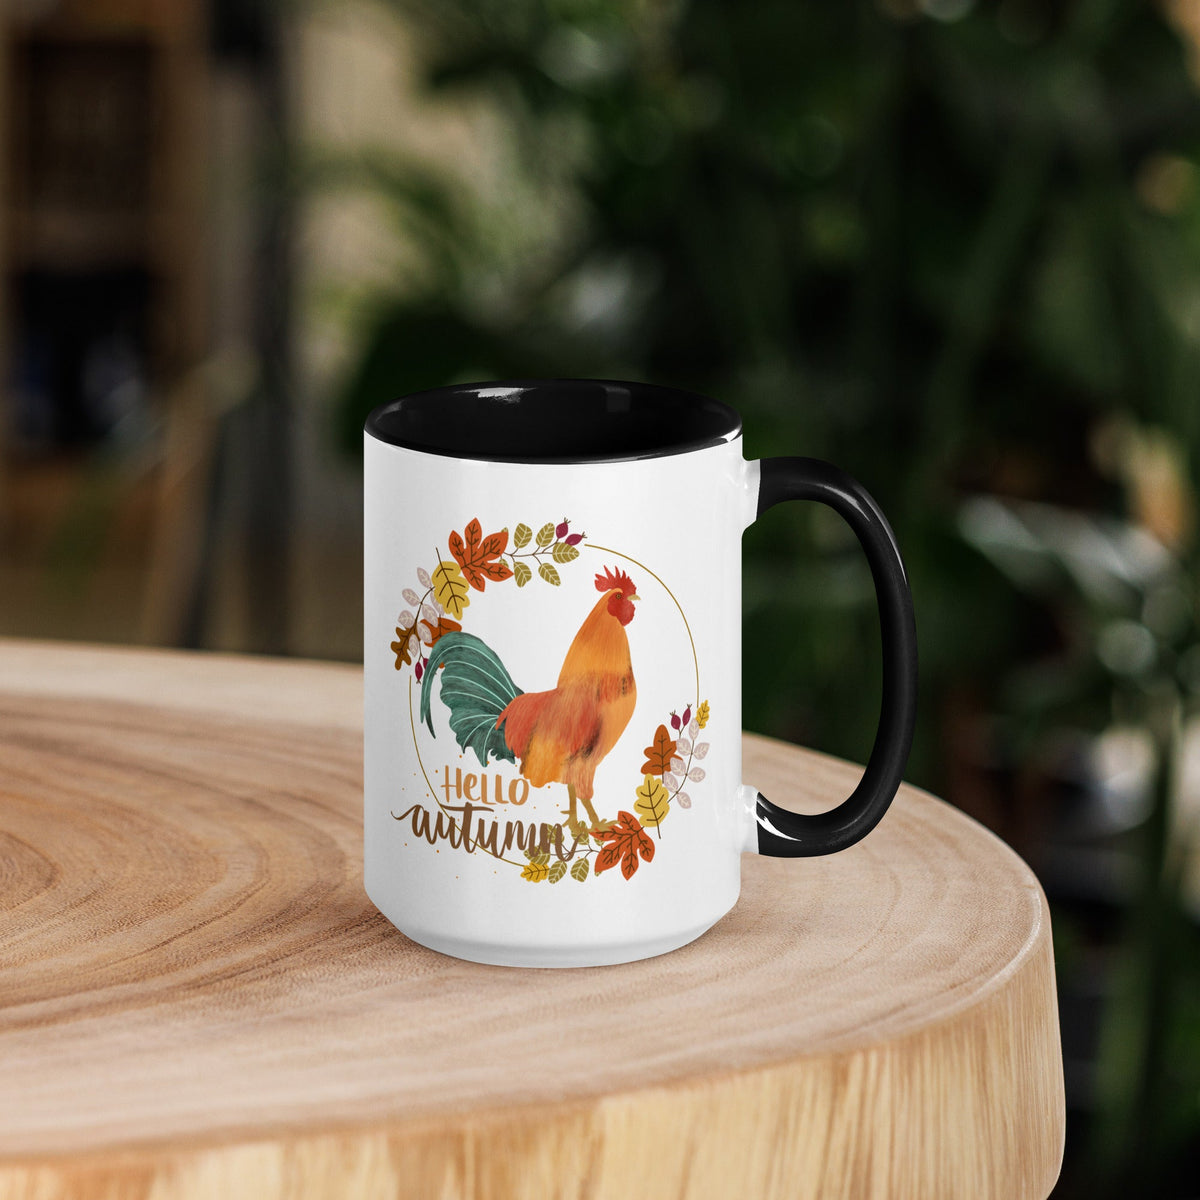 Hello Autumn Chicken Mug - Cluck It All Farms